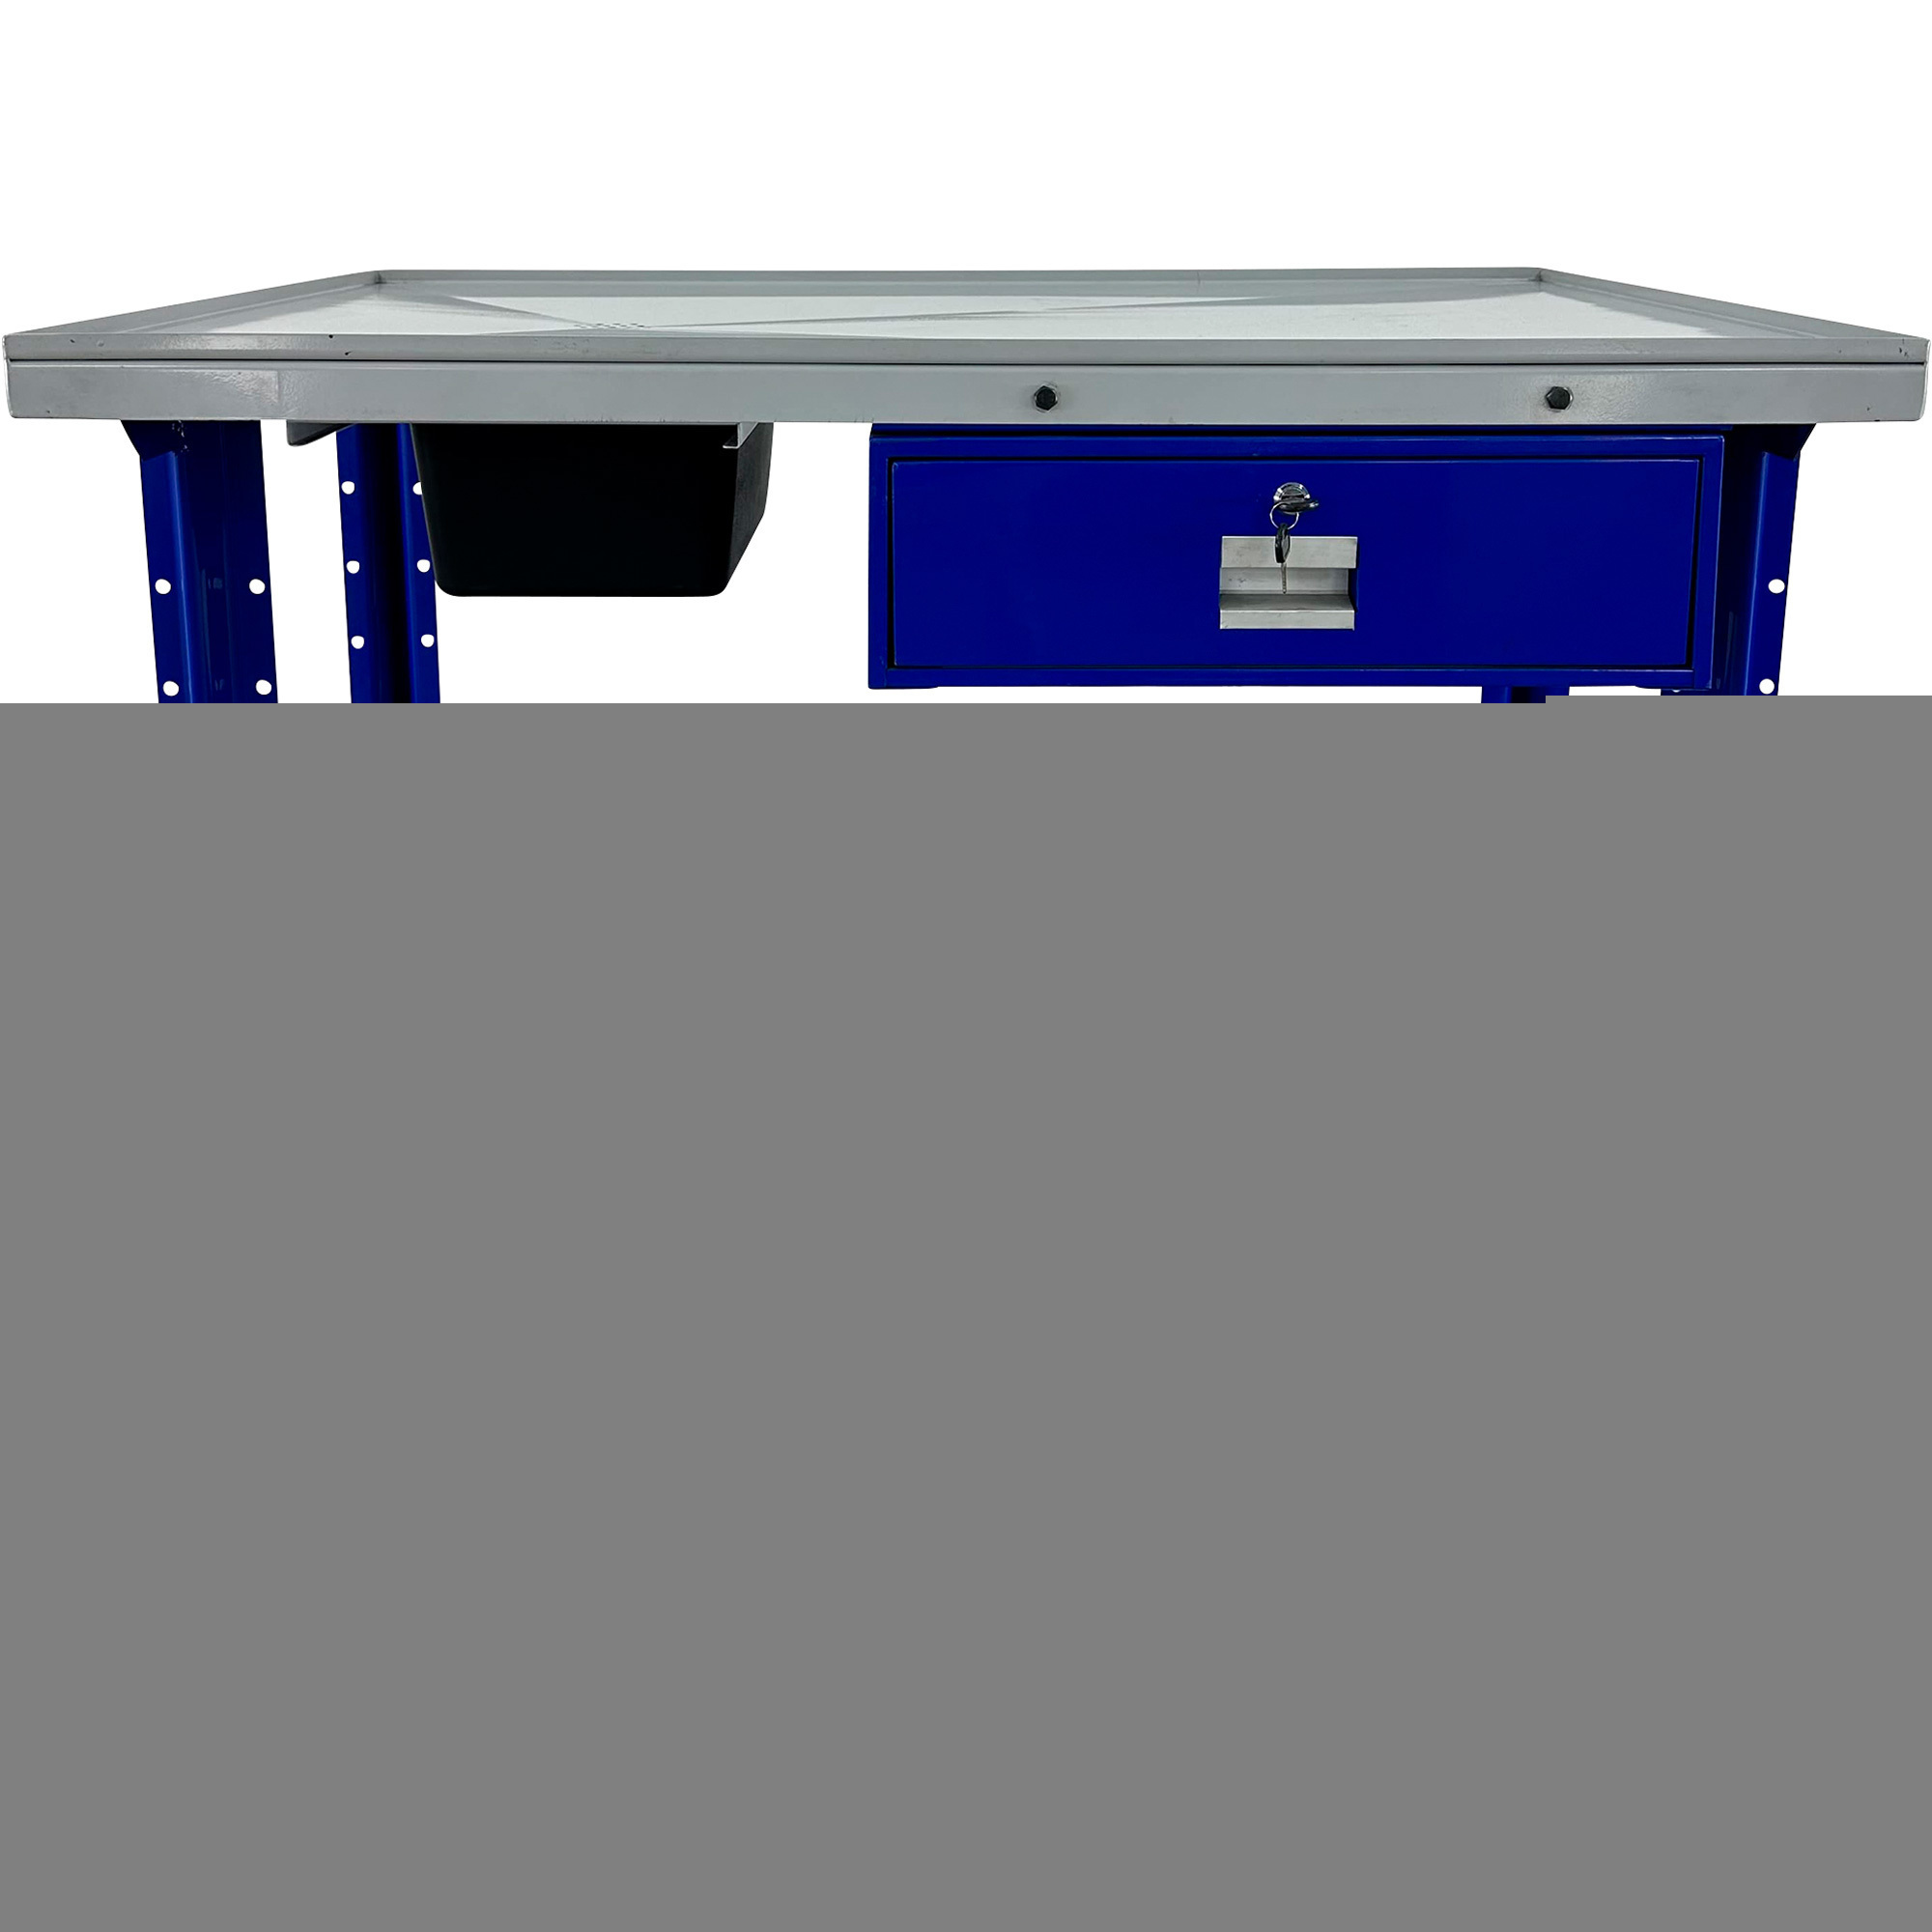 Ideal Premium Tear-Down Table â 1000-Lb. Capacity, 46.8Inch W x 31.5Inch L, Model PTDT-1000